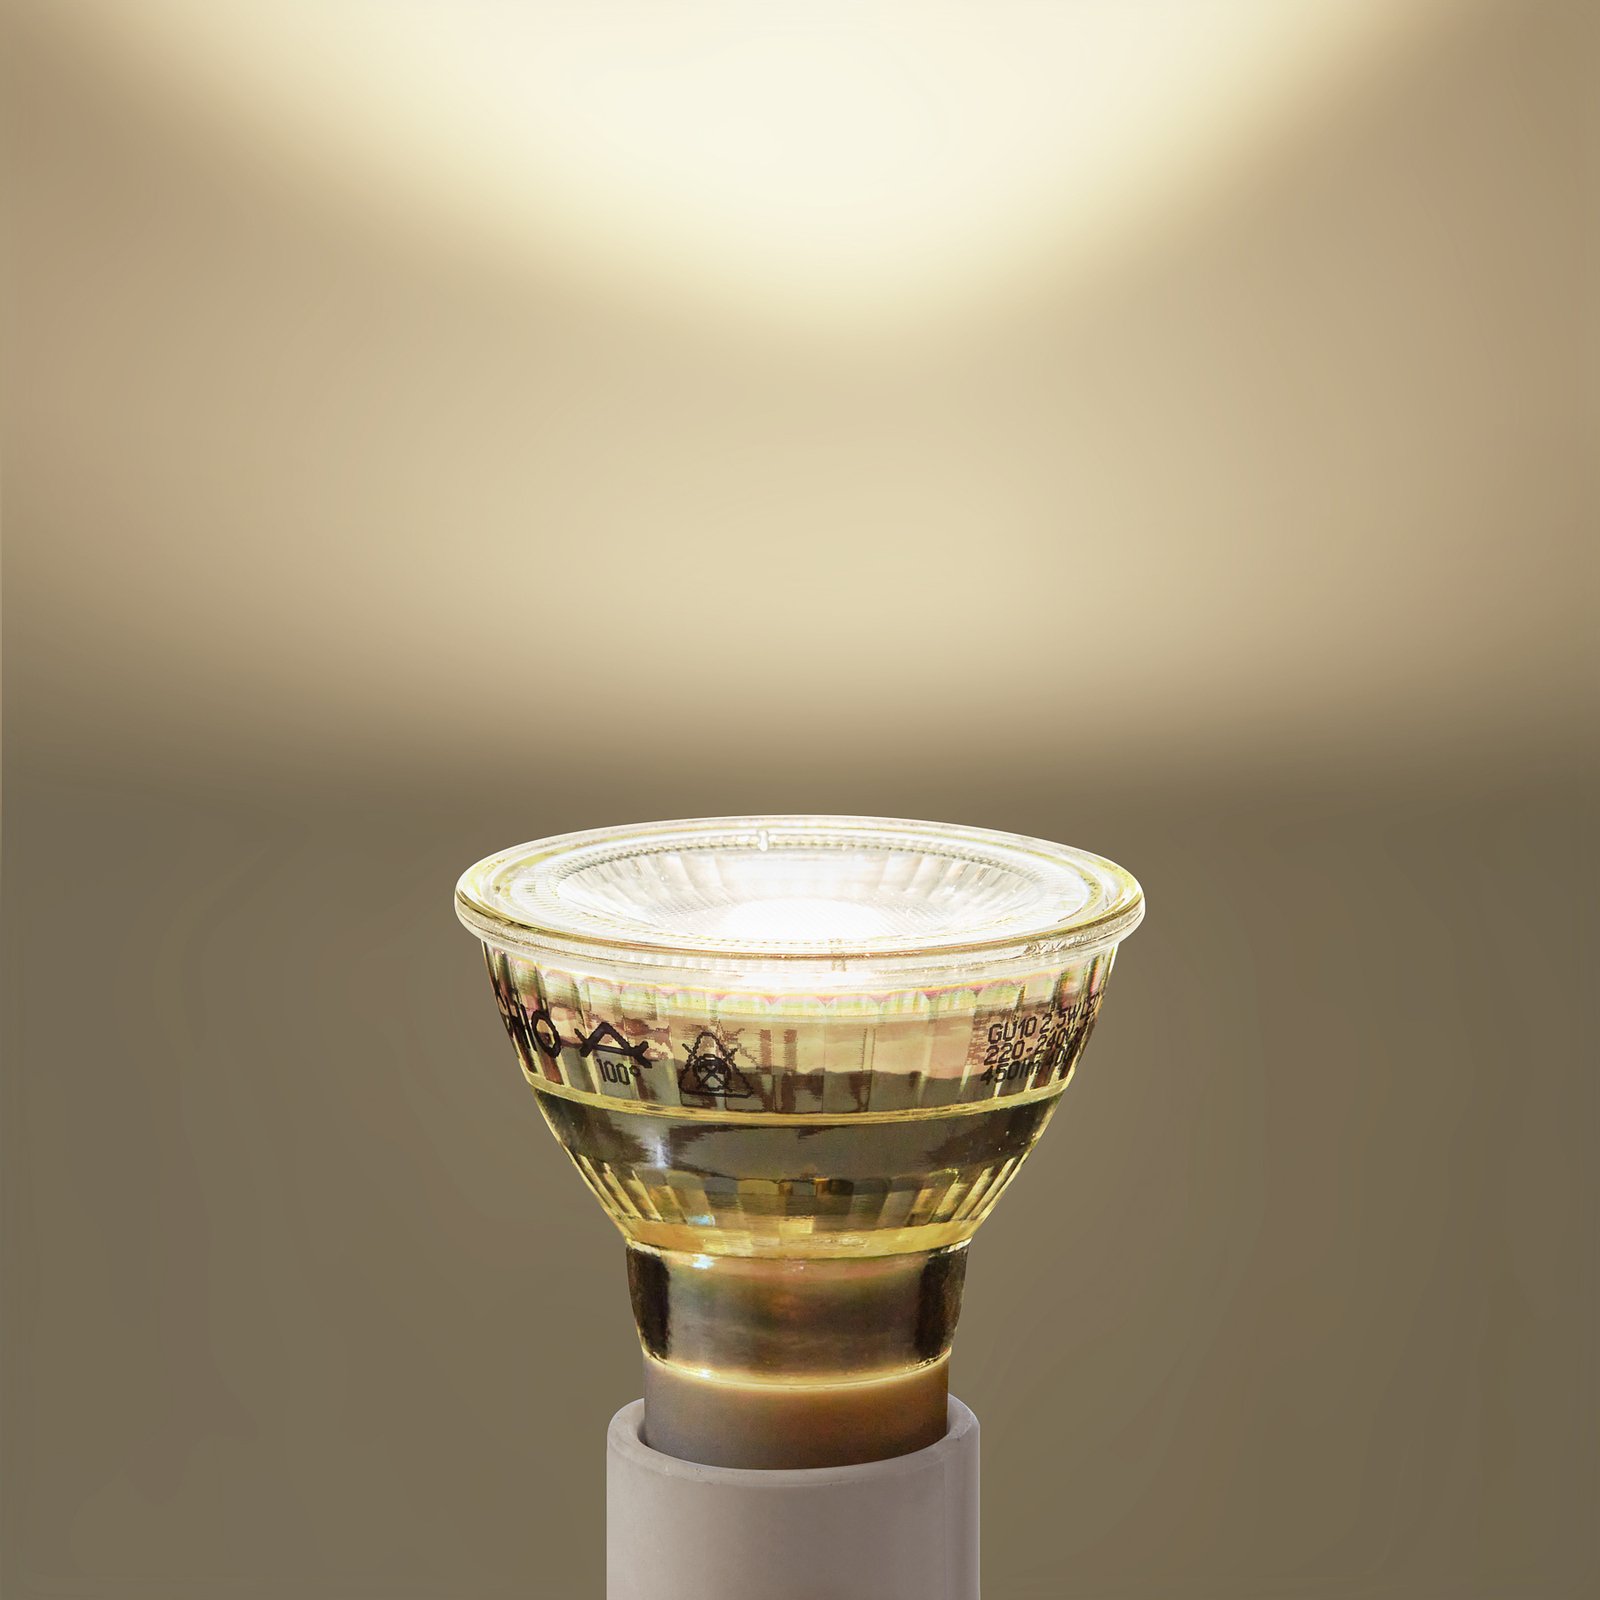 Arcchio LED bulb GU10 2.5W 4000K 450lm glass set of 2